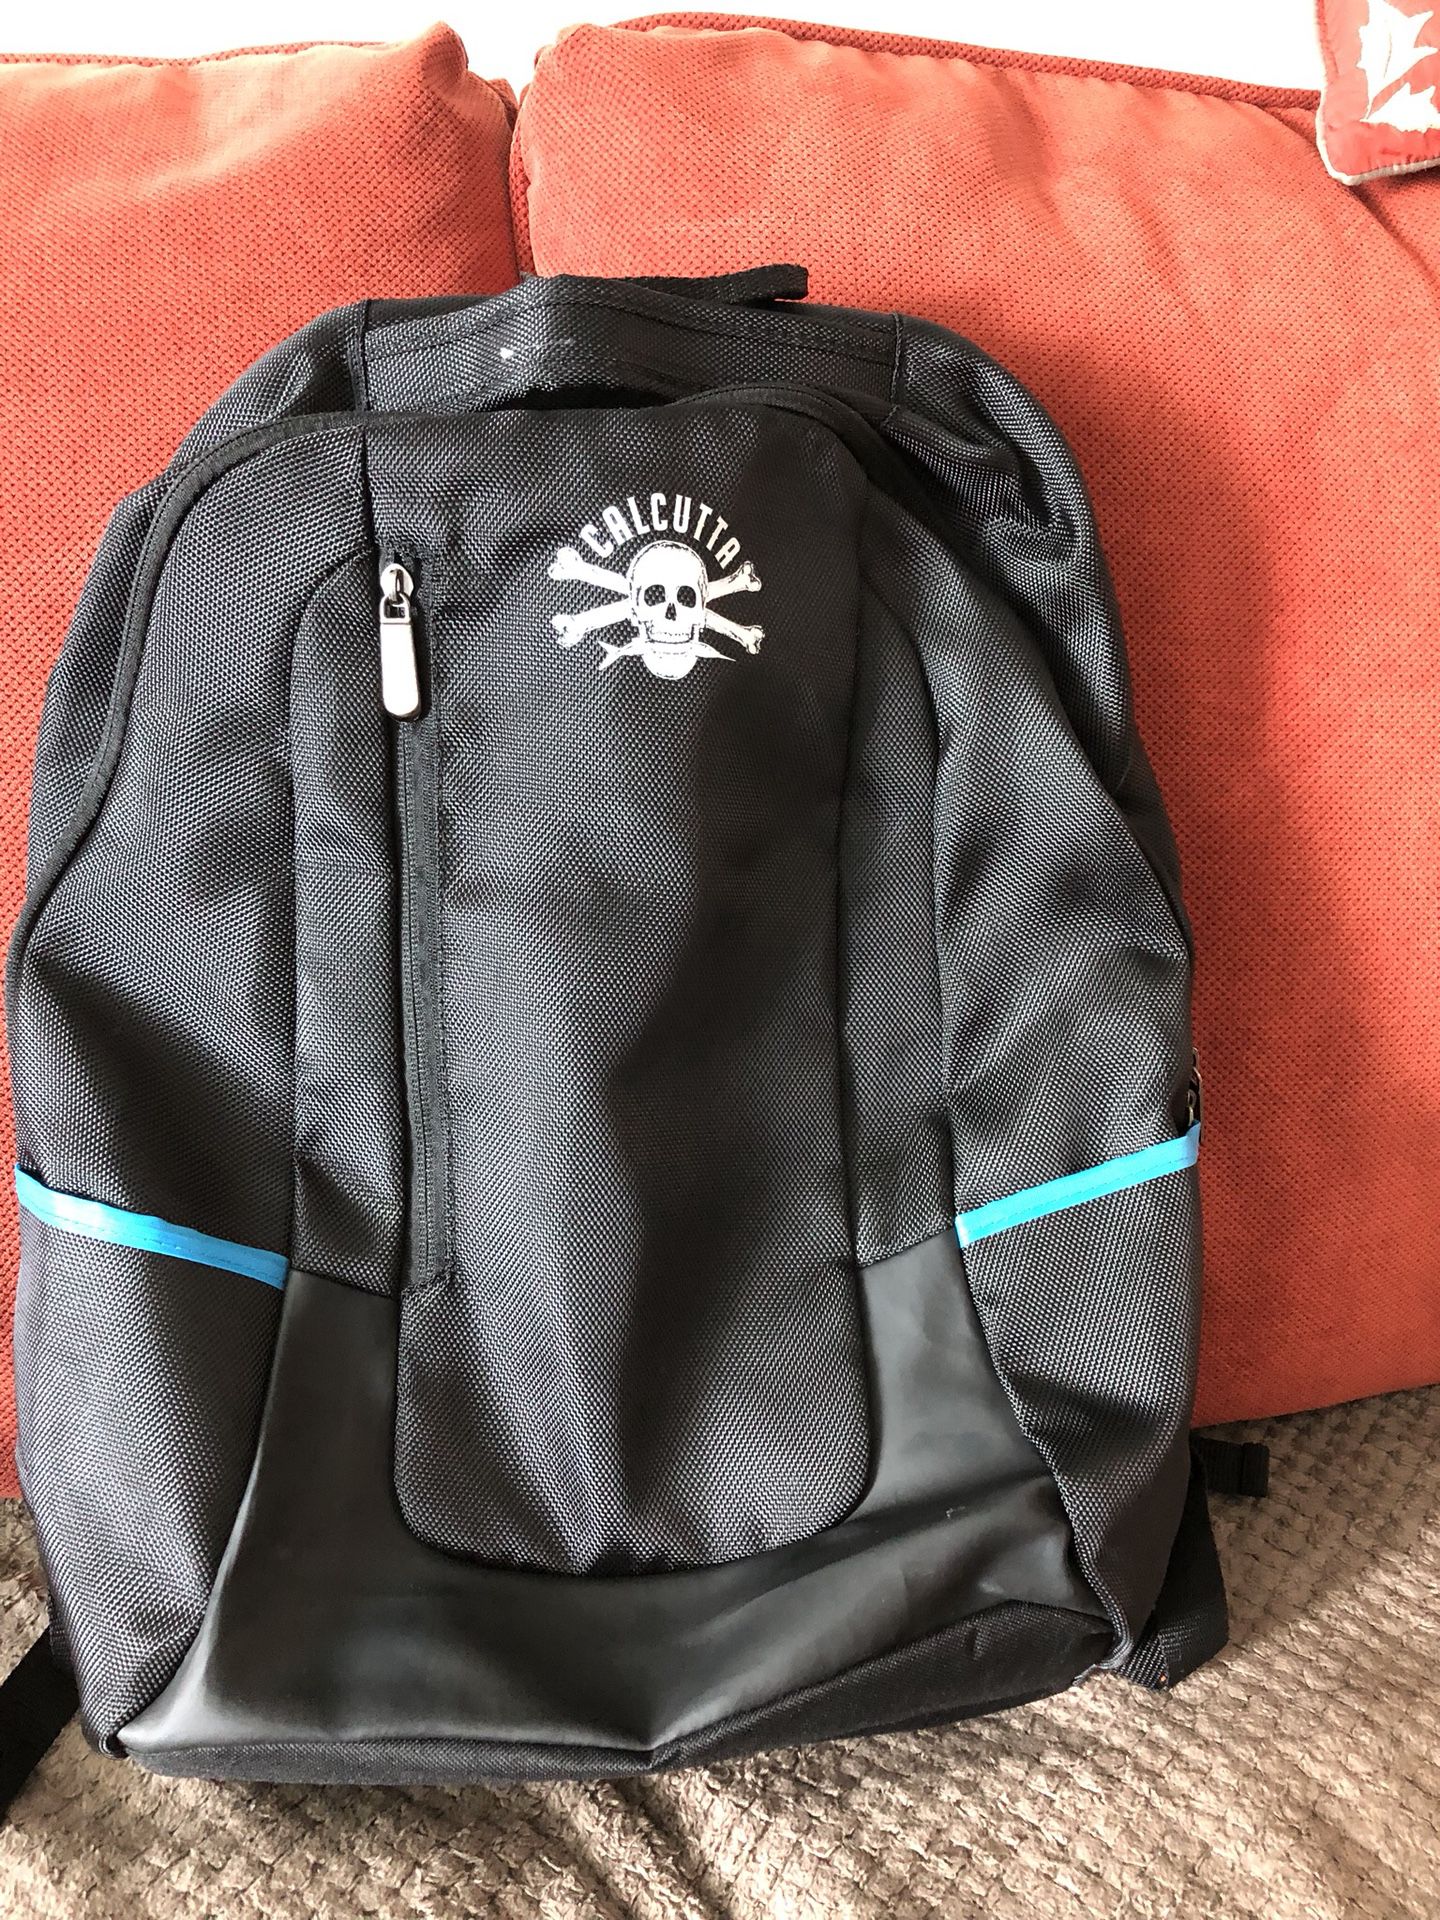 Backpack bag $35